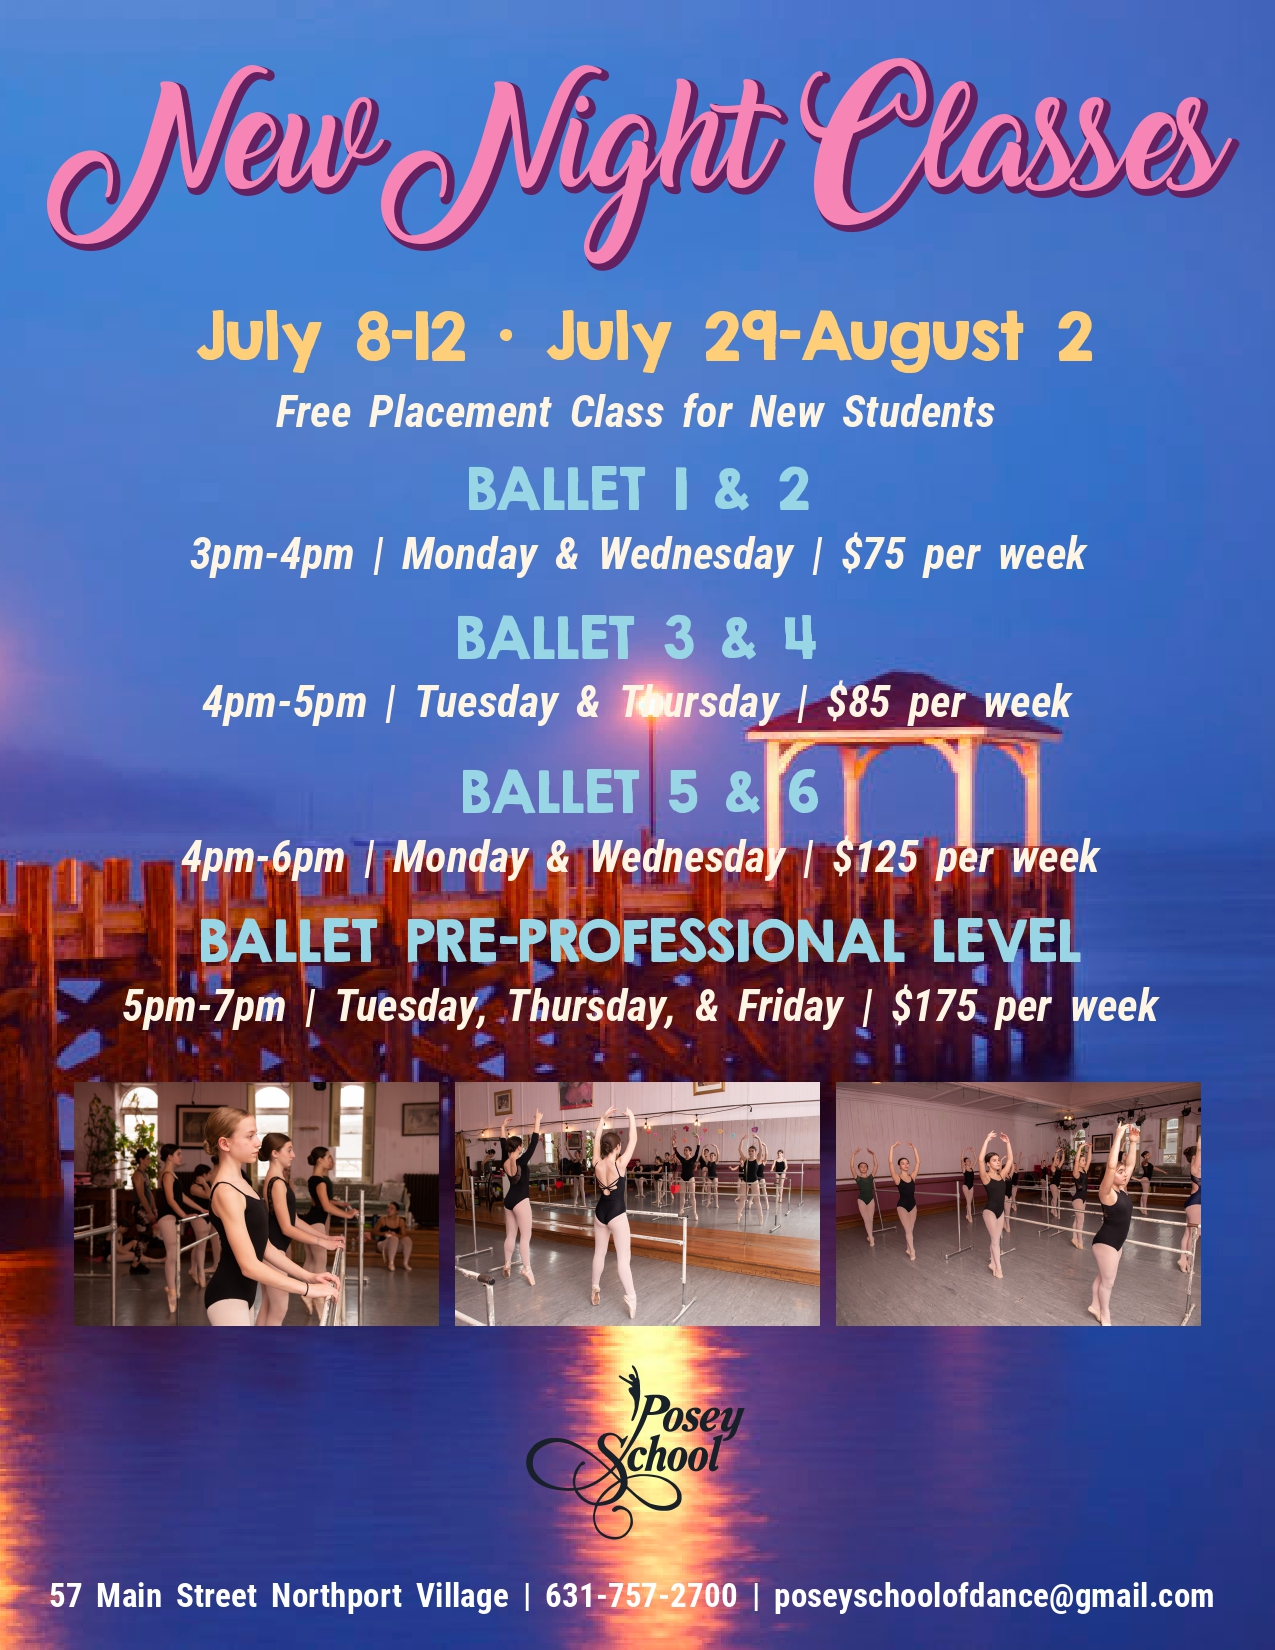 Summer Dance Camp & Summer Dance Intensive at Posey School